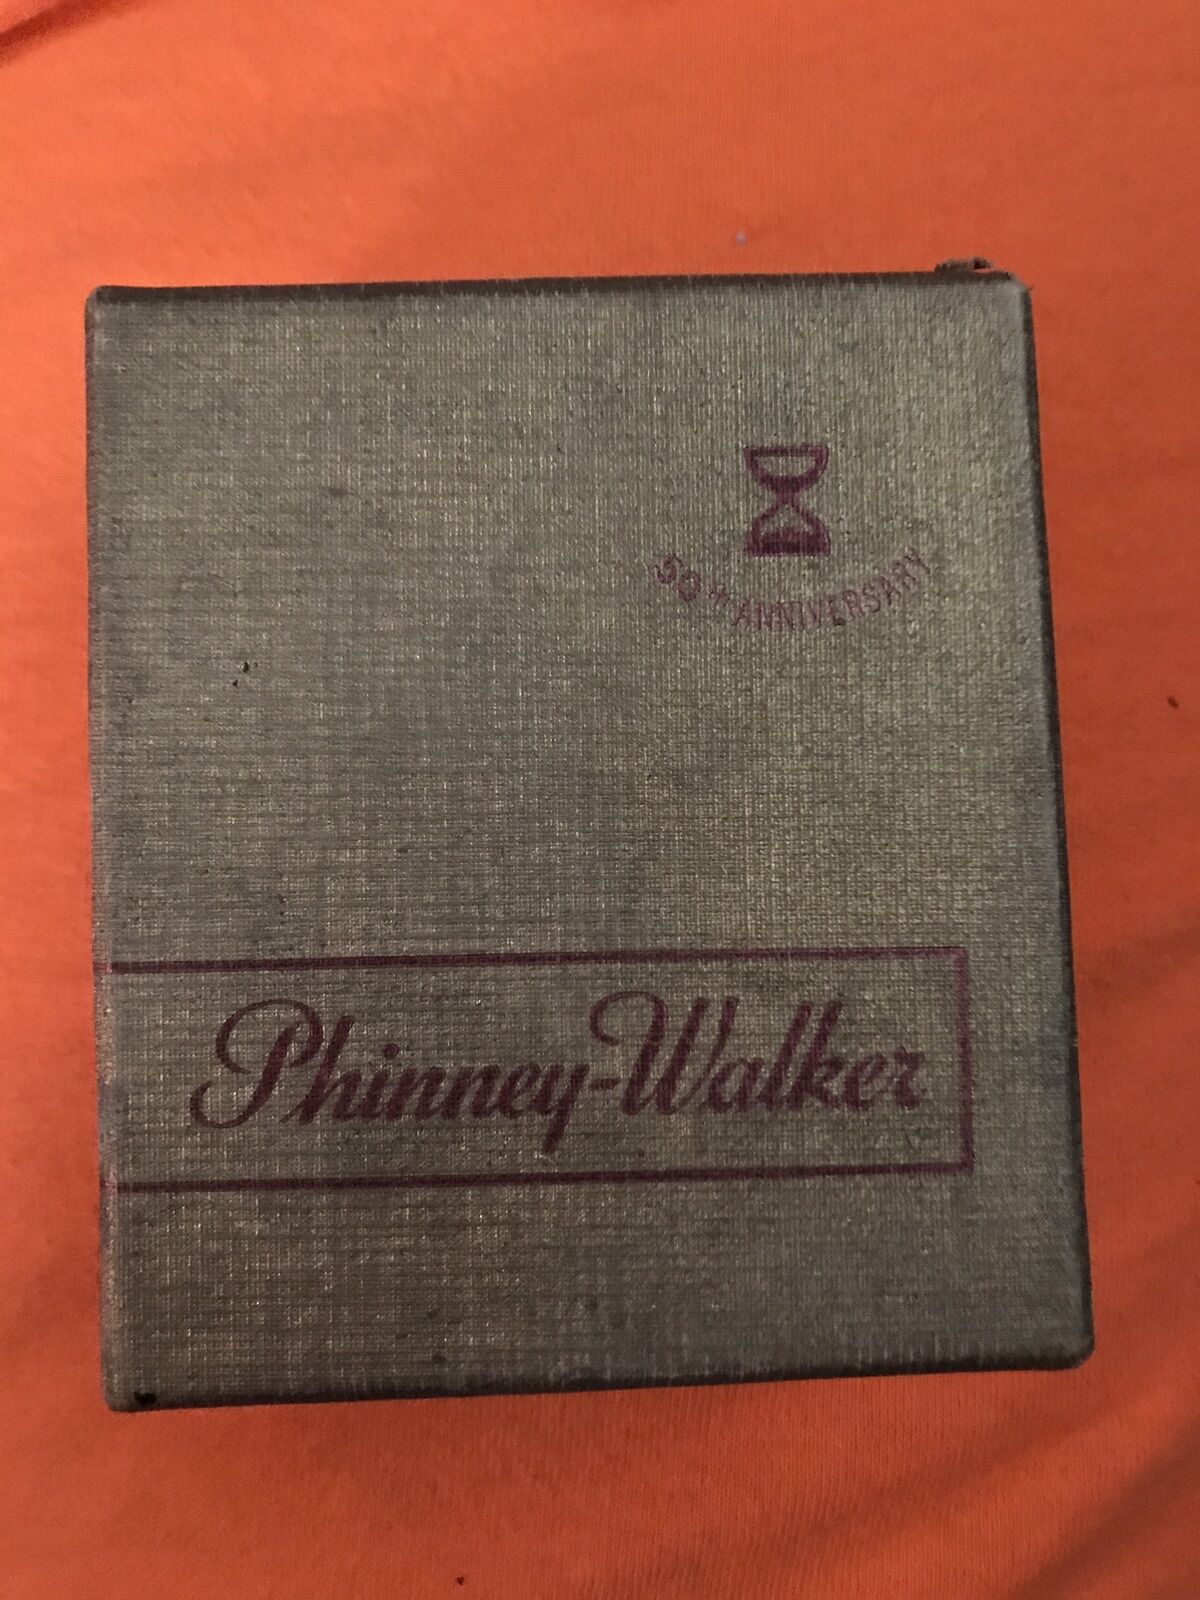 Phinney Walker Travel Alarm Clock